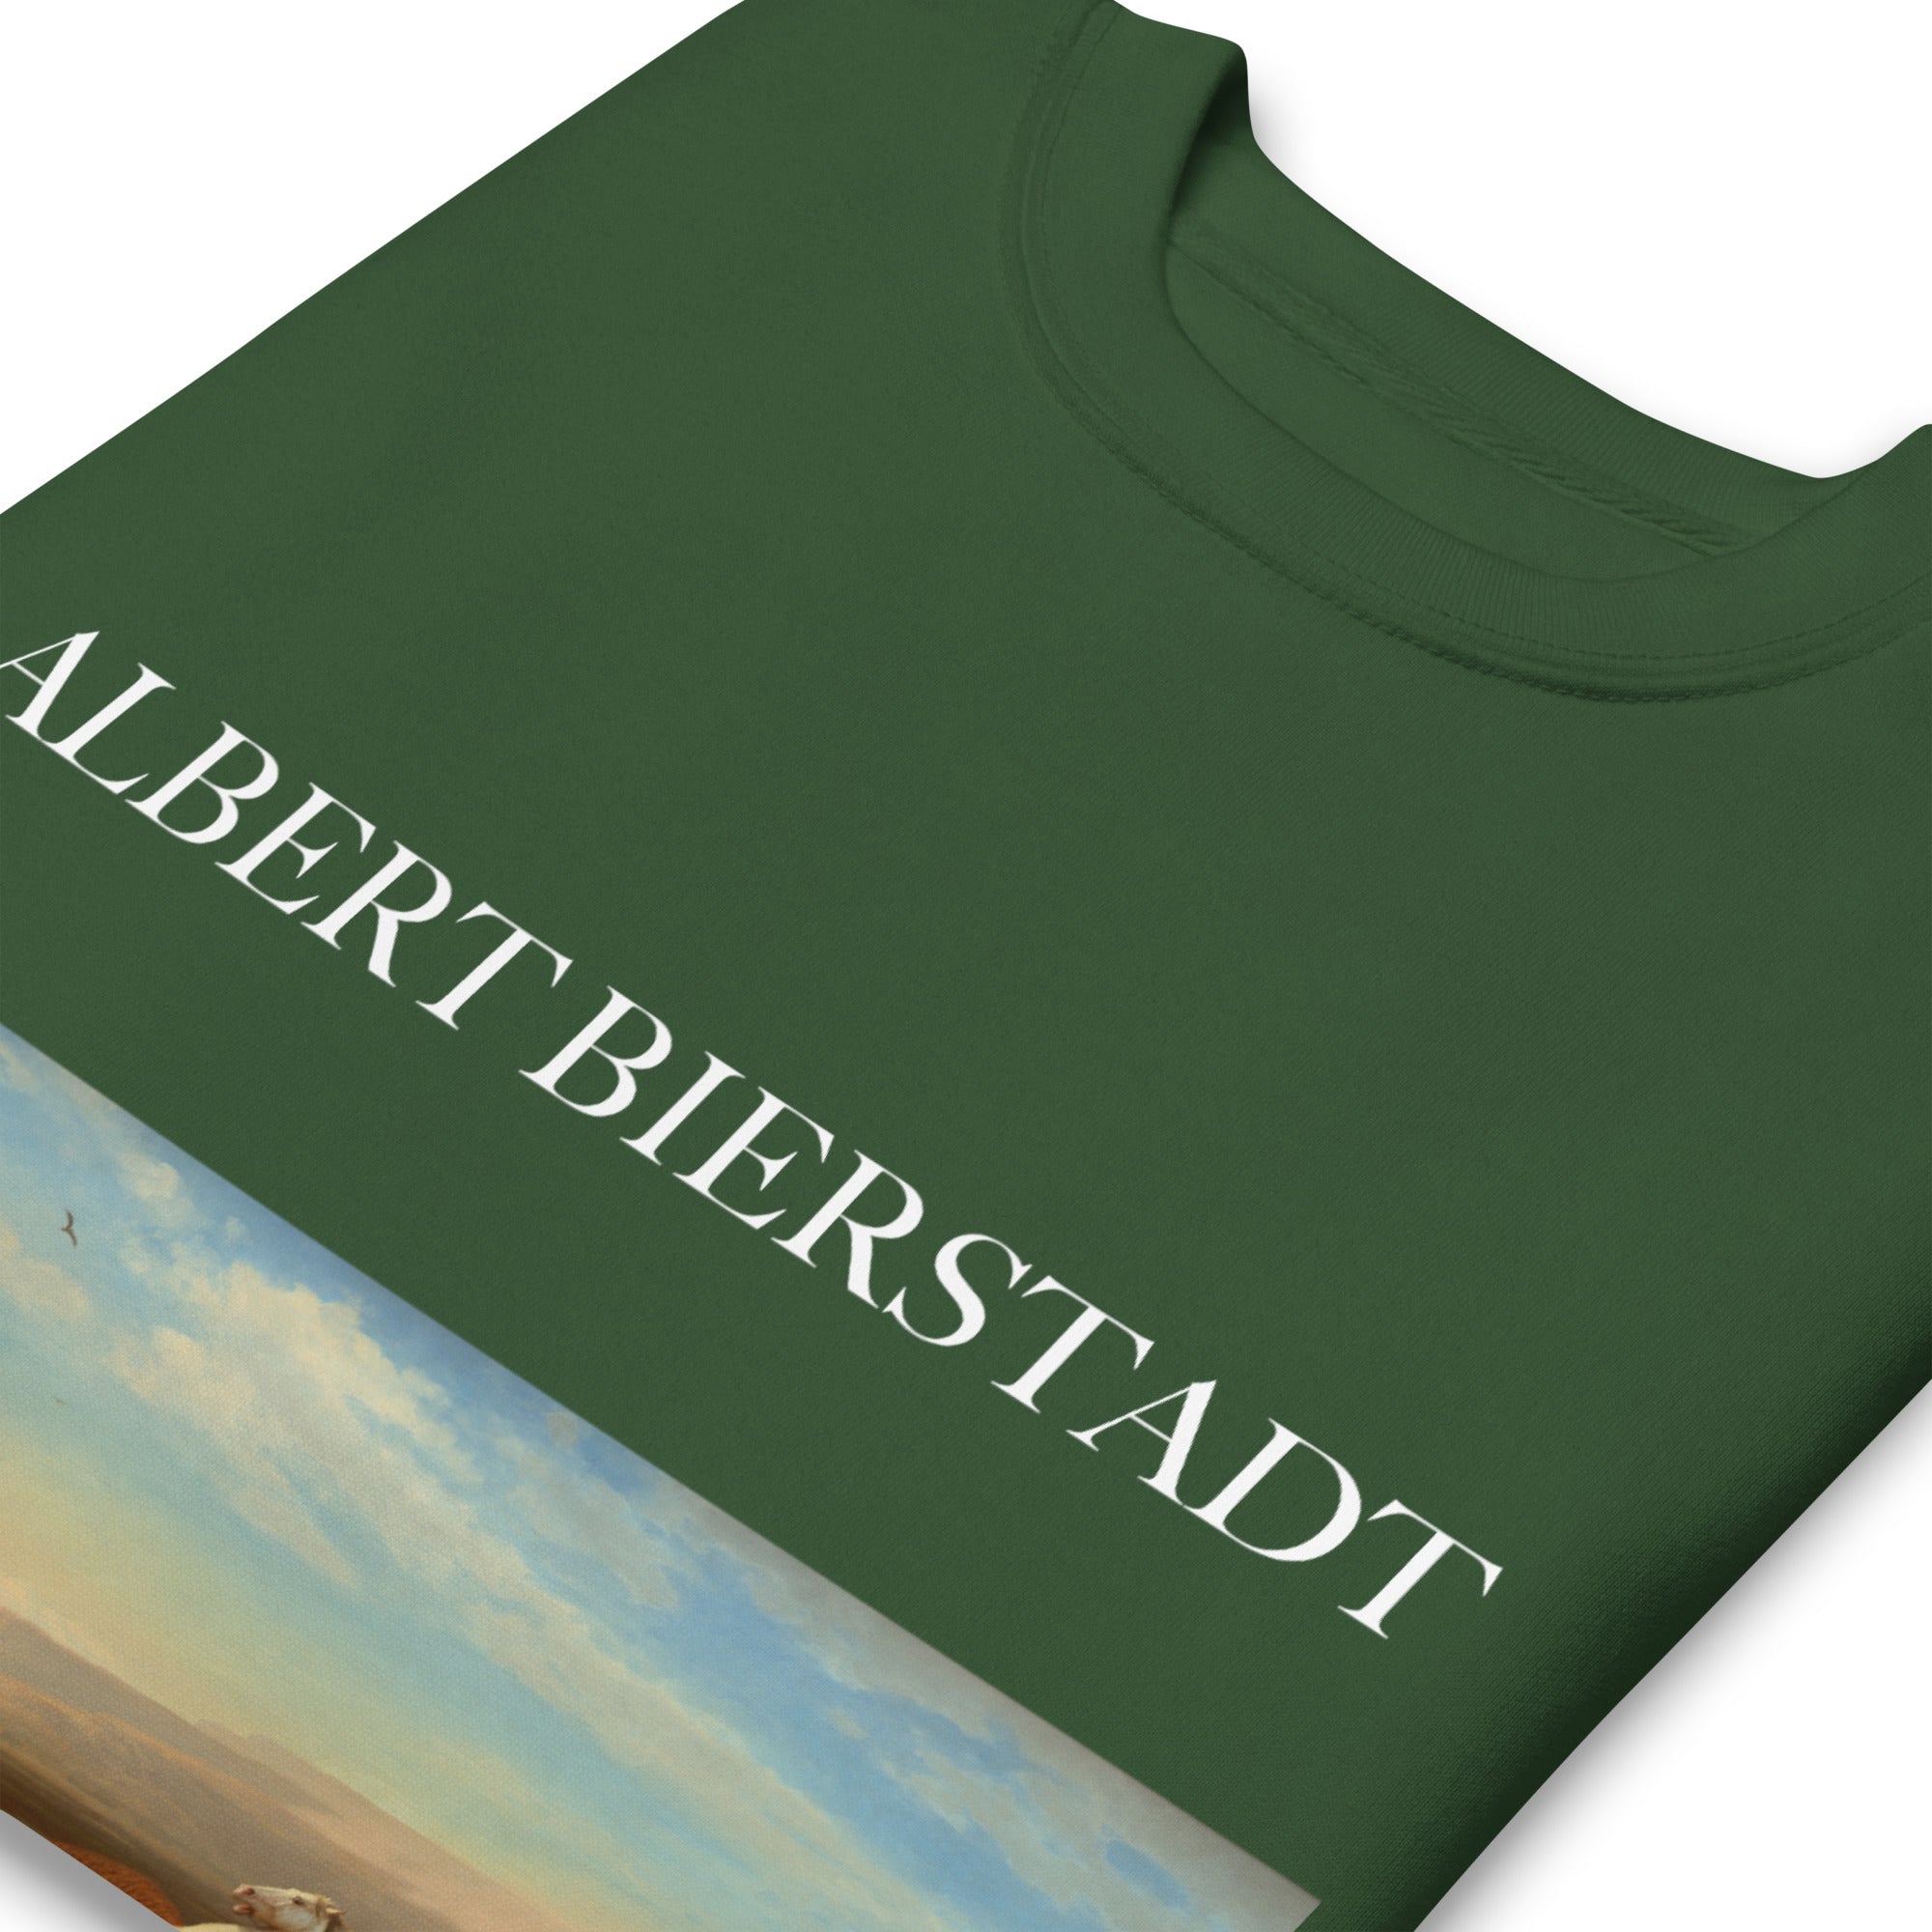 Albert Bierstadt 'The Last of the Buffalo' Famous Painting Sweatshirt | Unisex Premium Sweatshirt